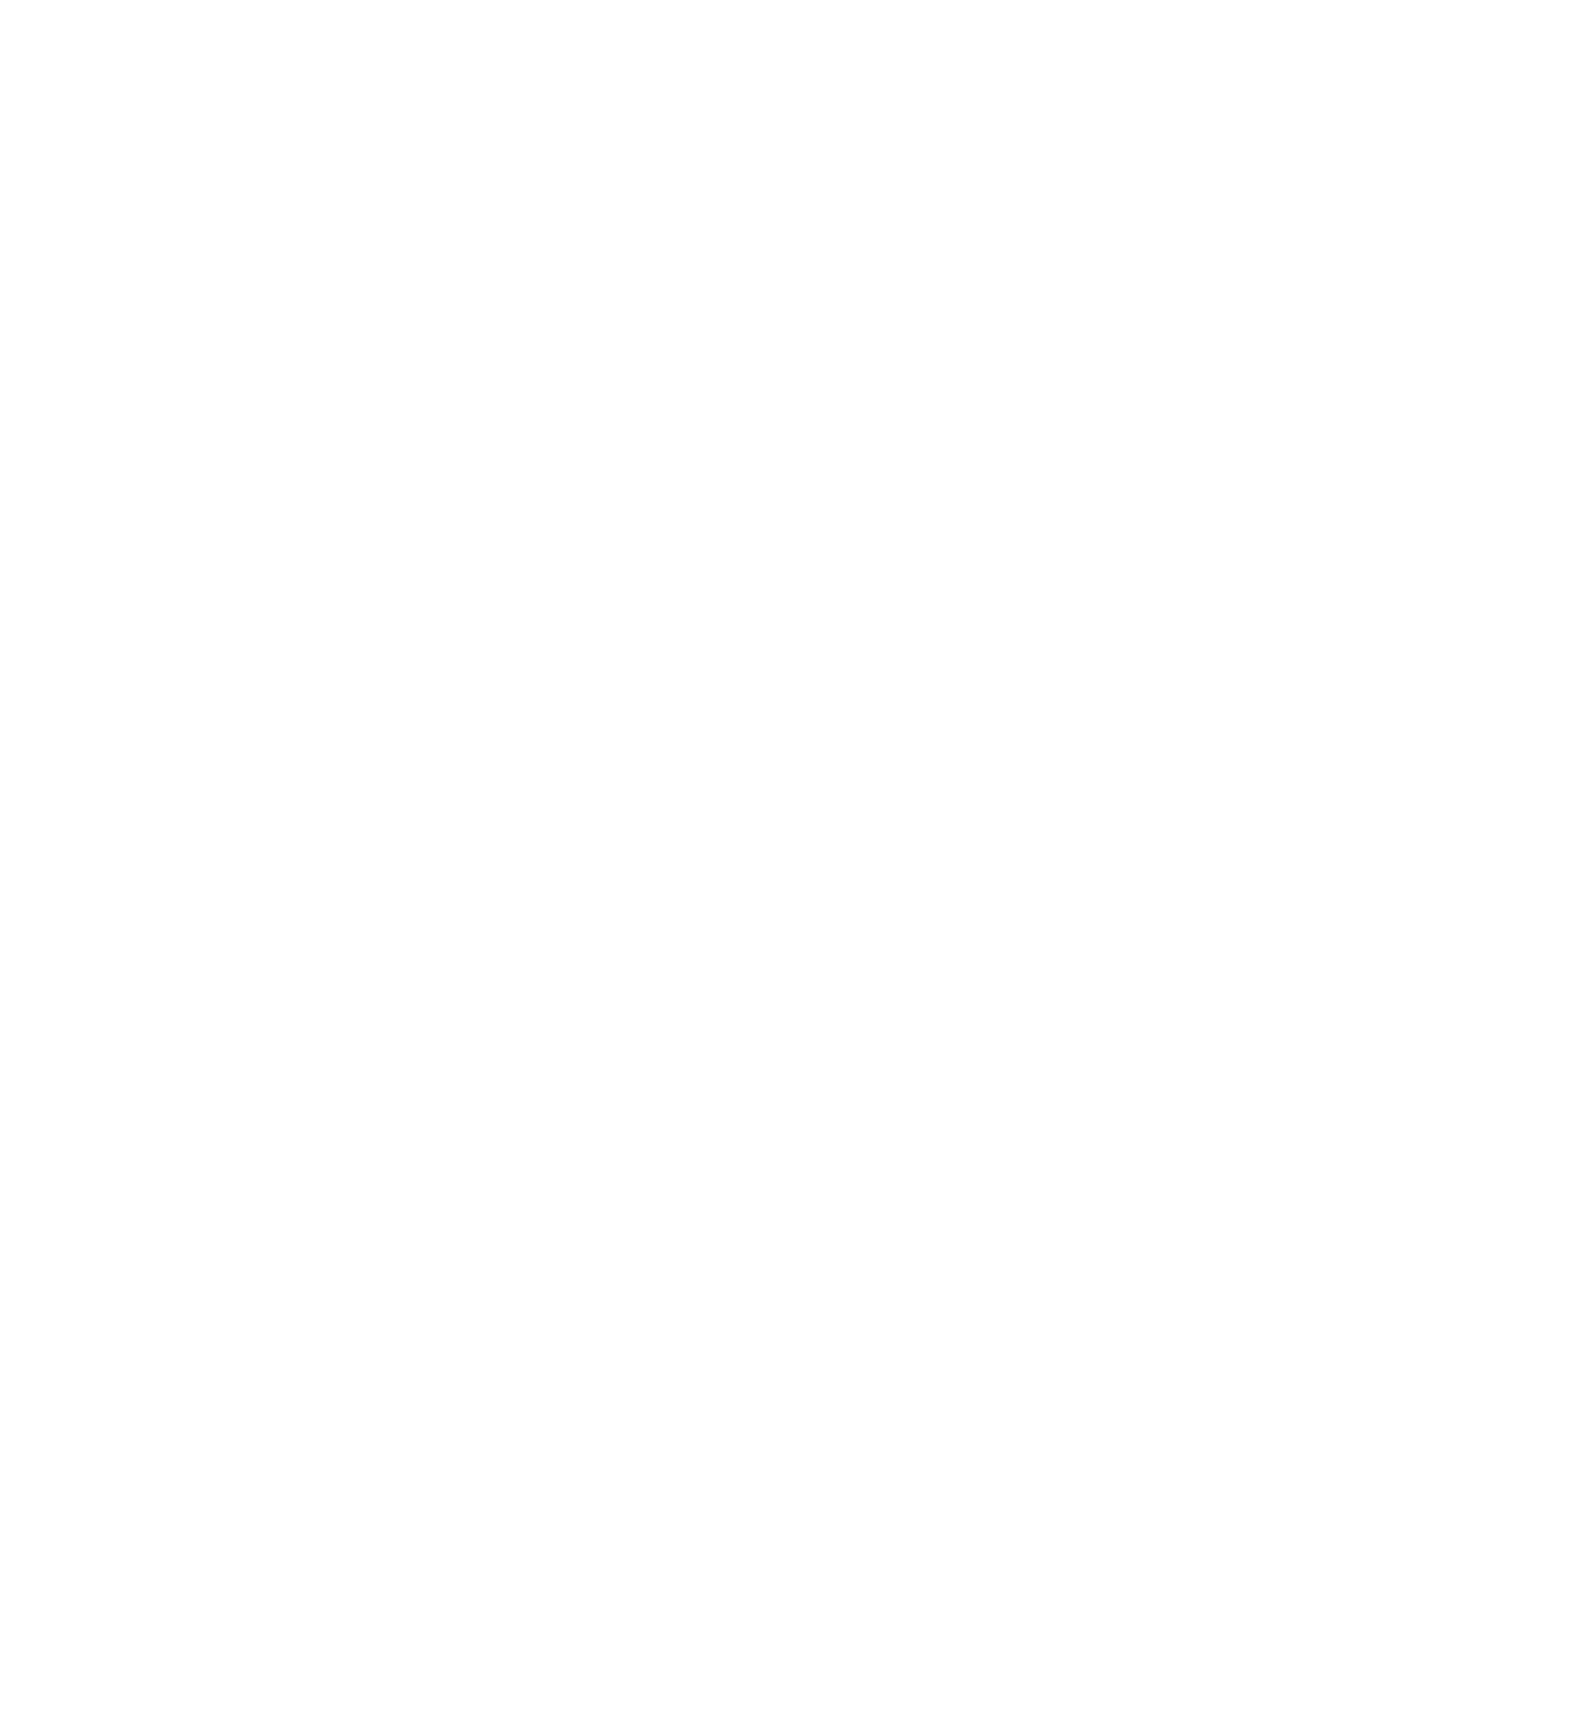 Island City Brewing Company